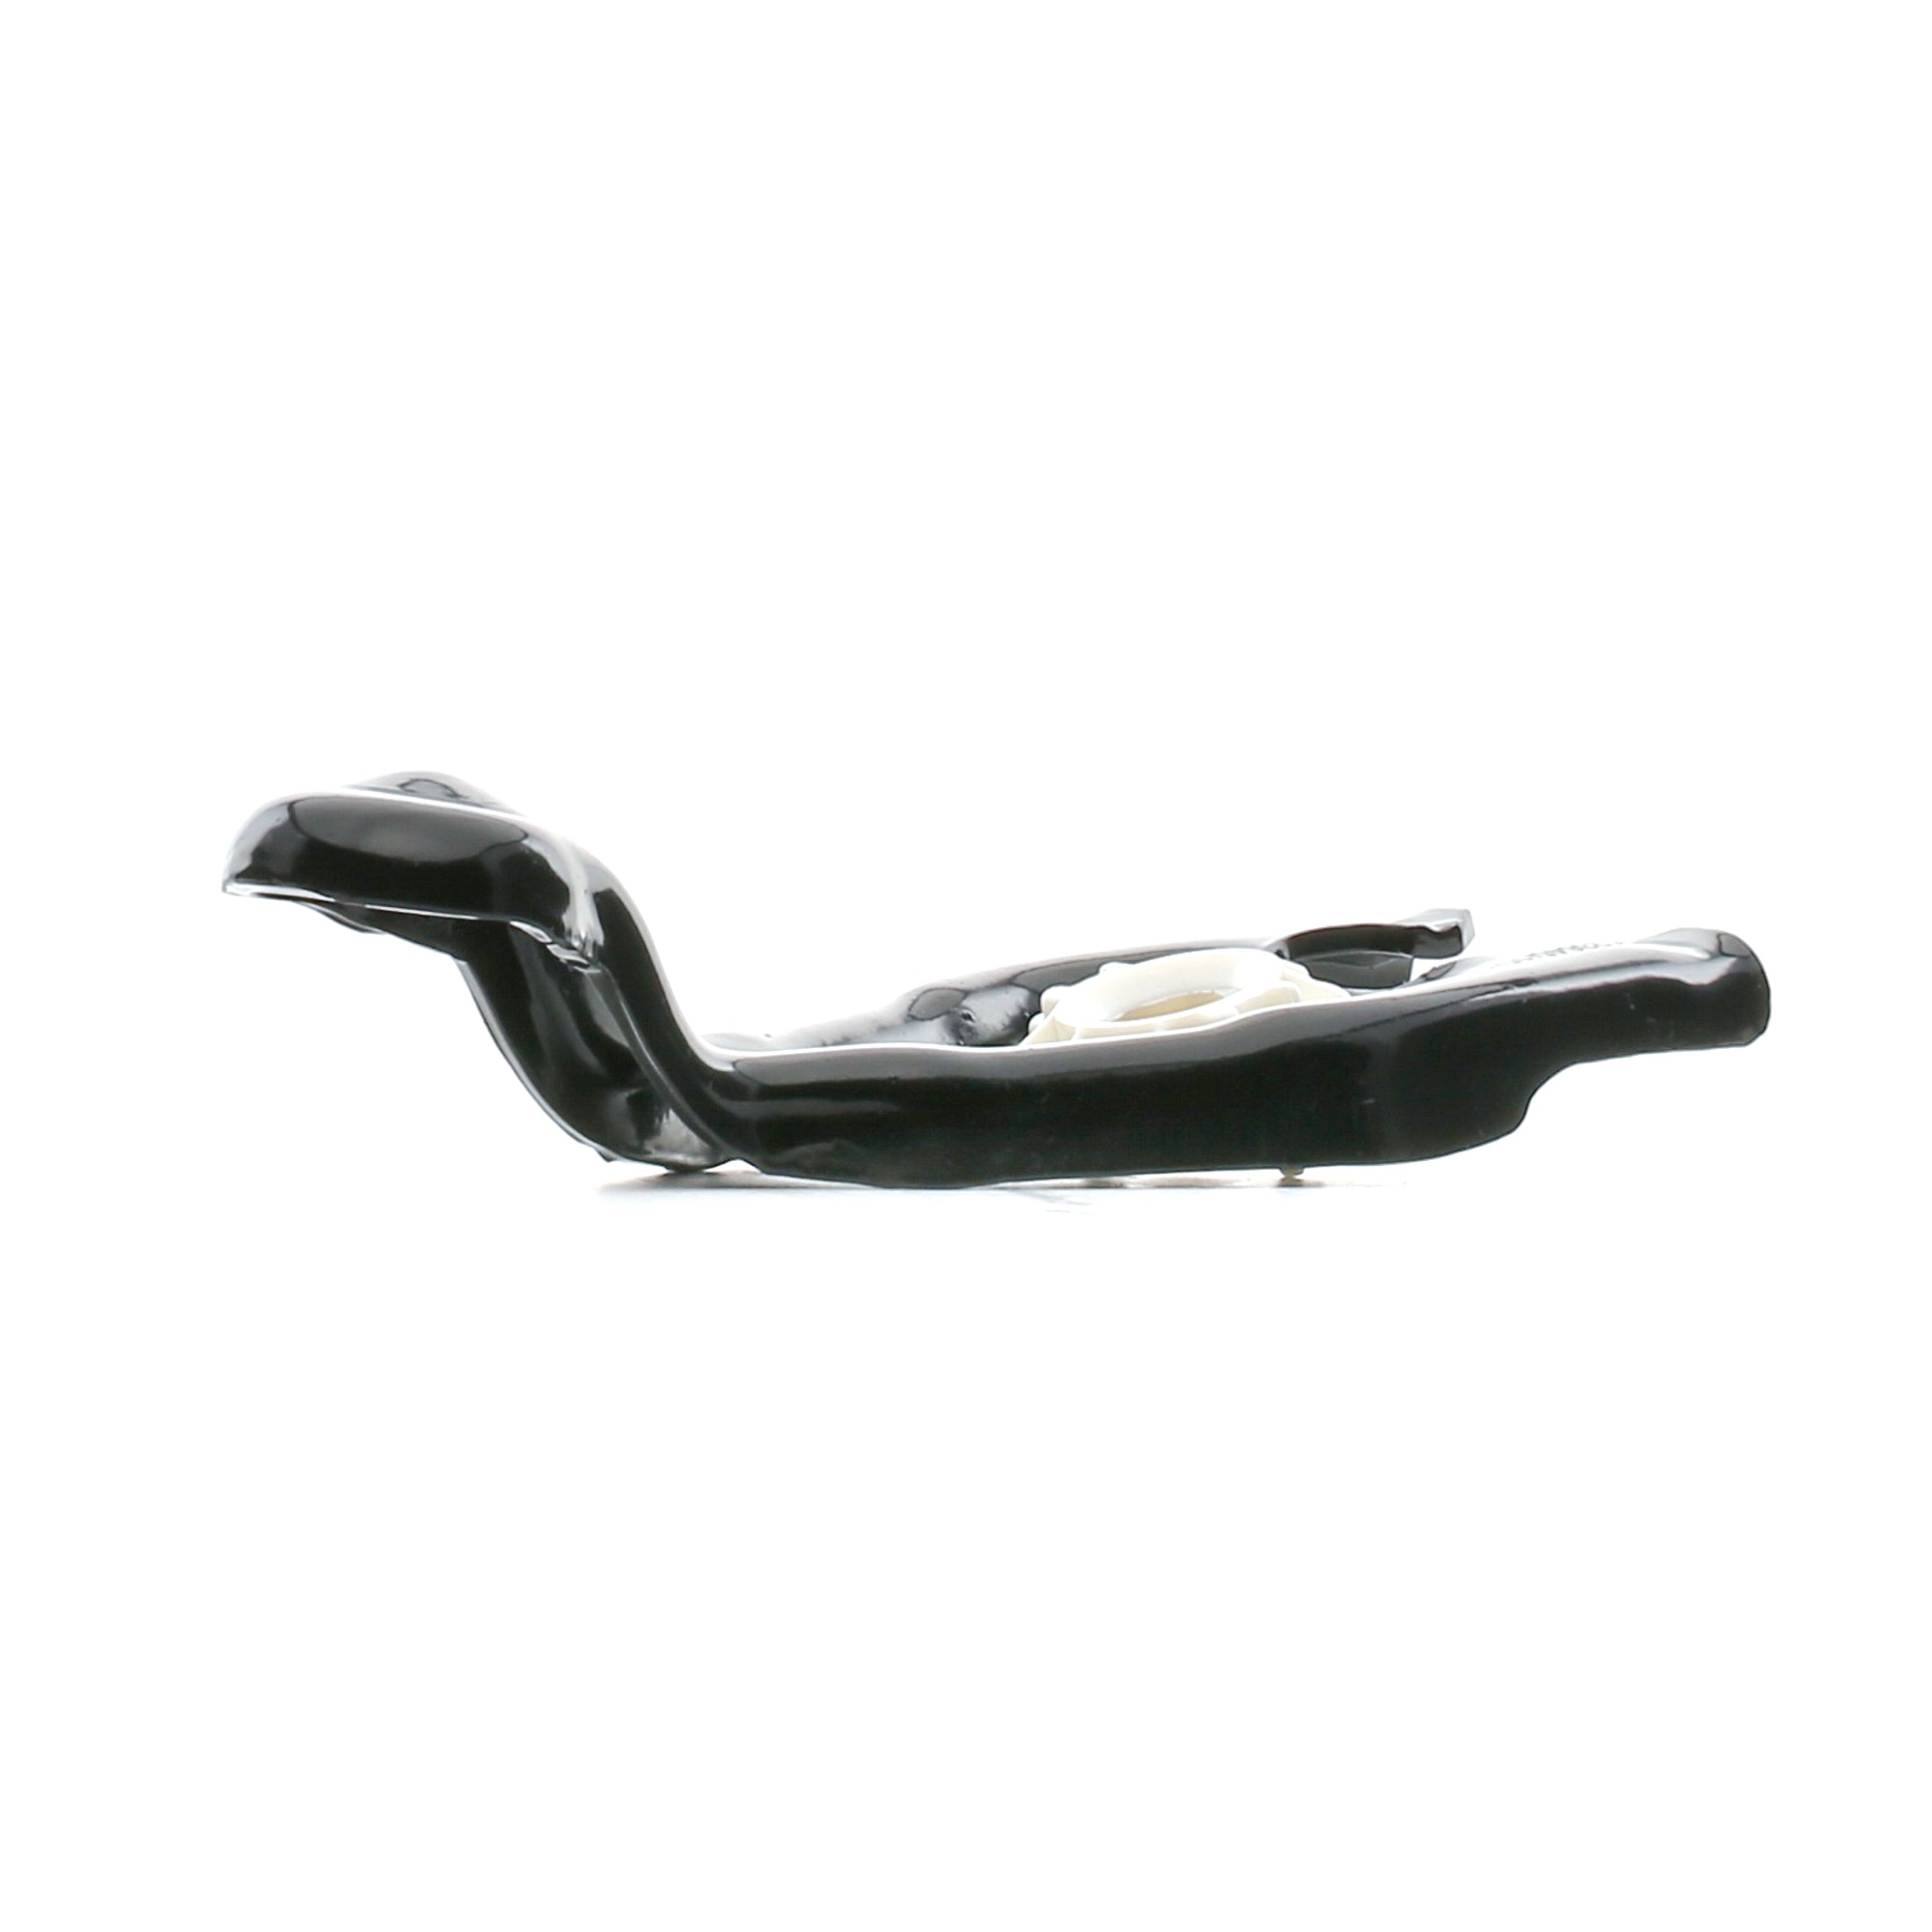 Peugeot 207 Release fork 15738286 STARK SKRFC-3500006 online buy